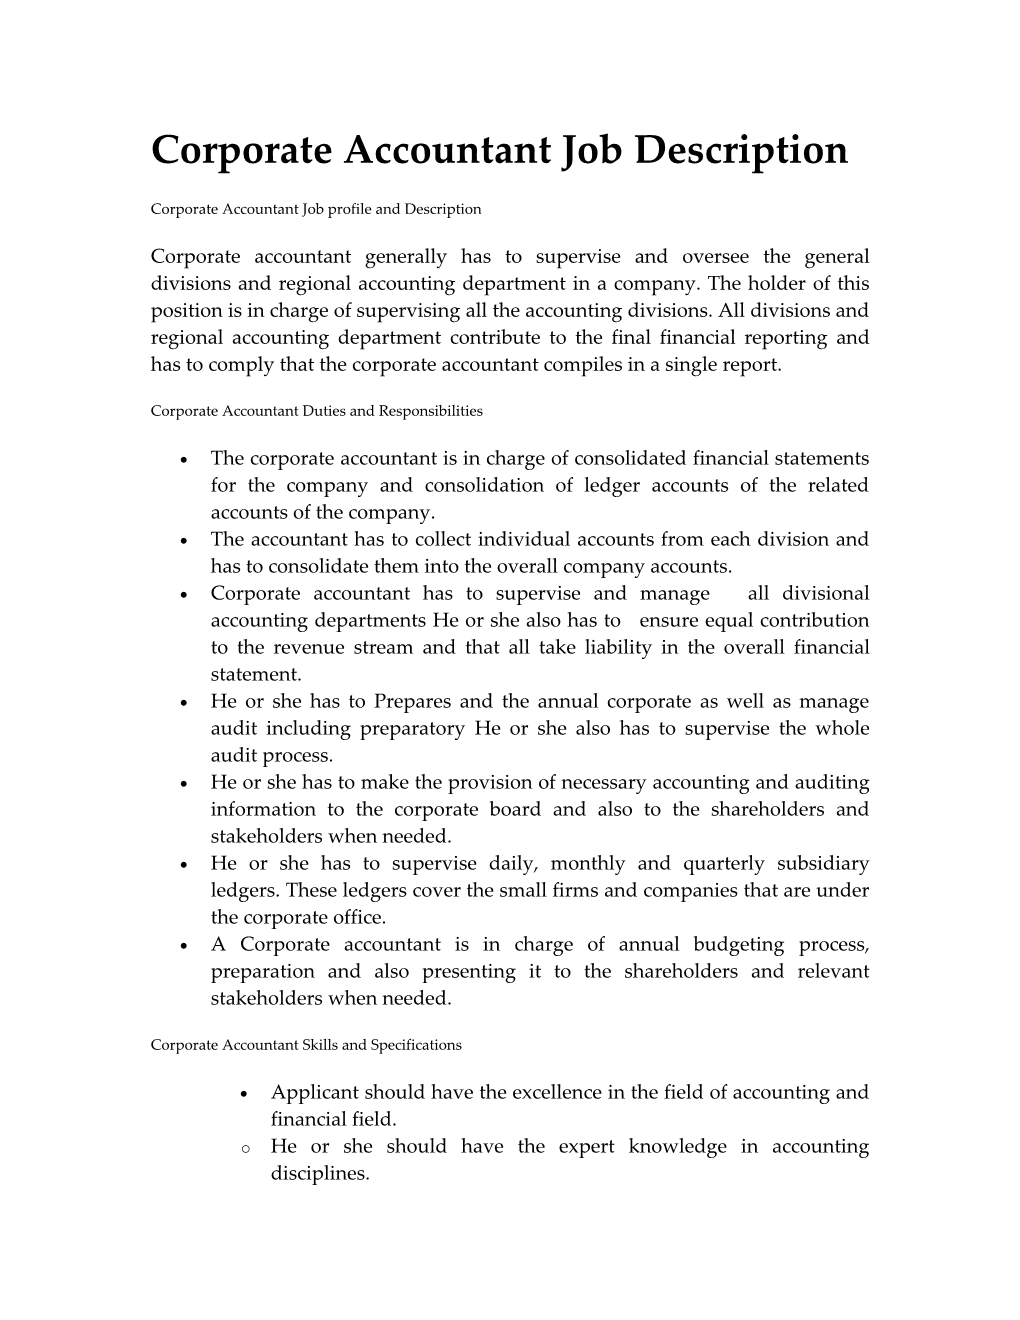 Corporate Accountant Job Description